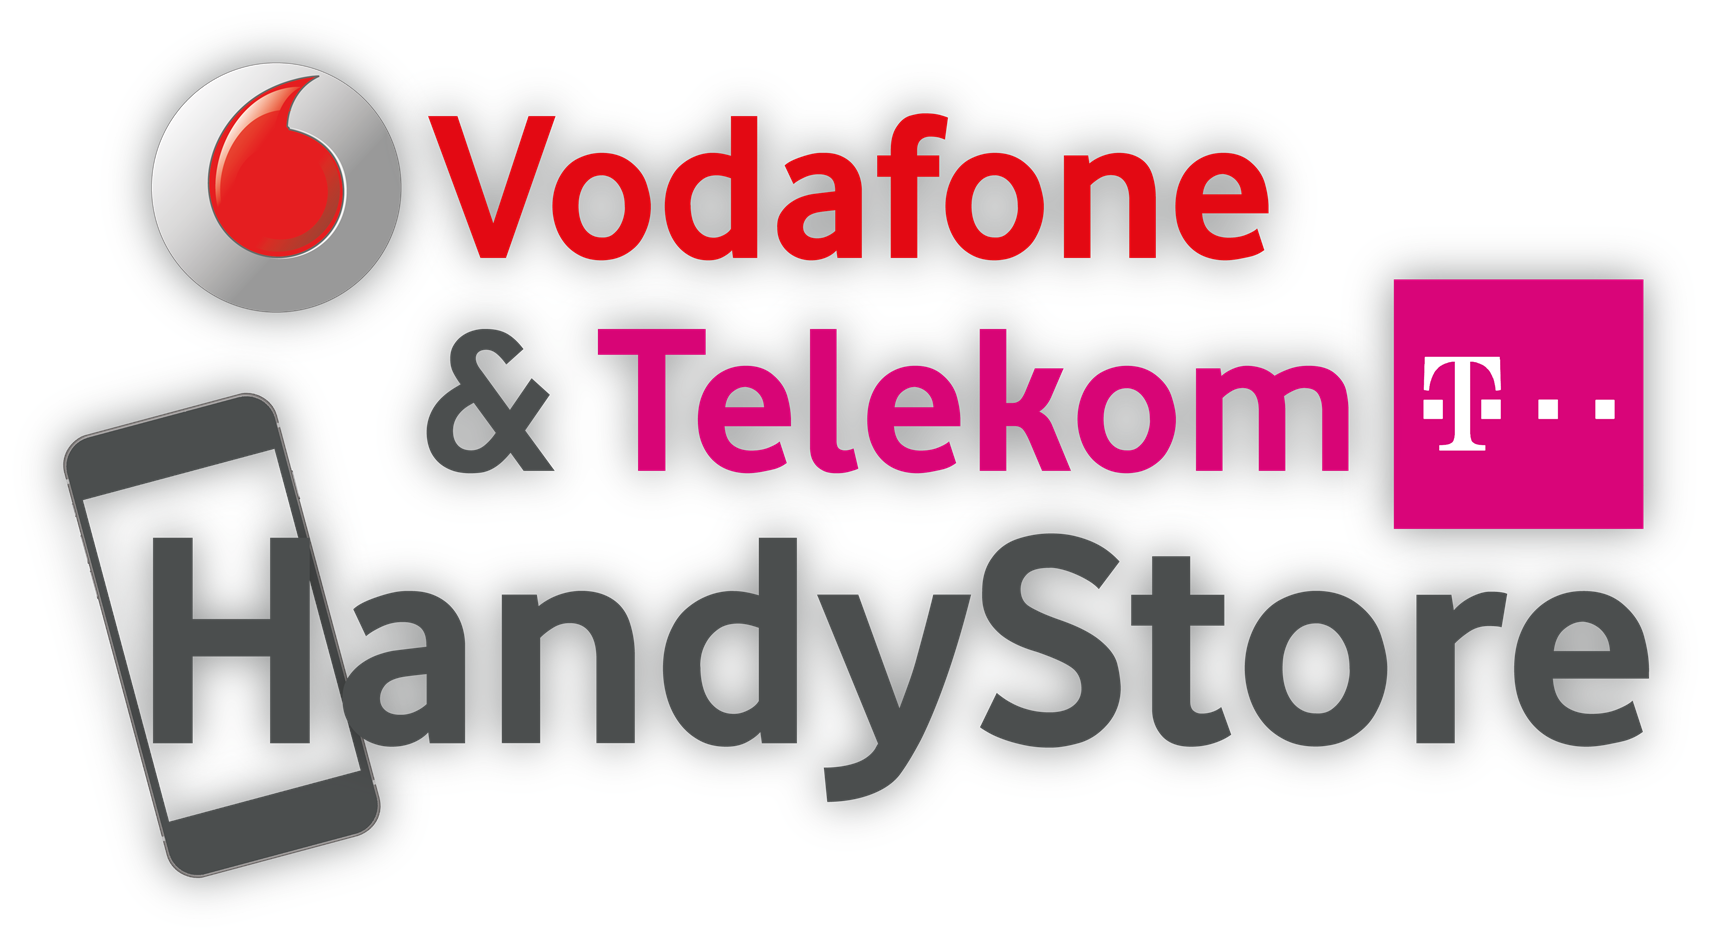 Vodafone Handystore 